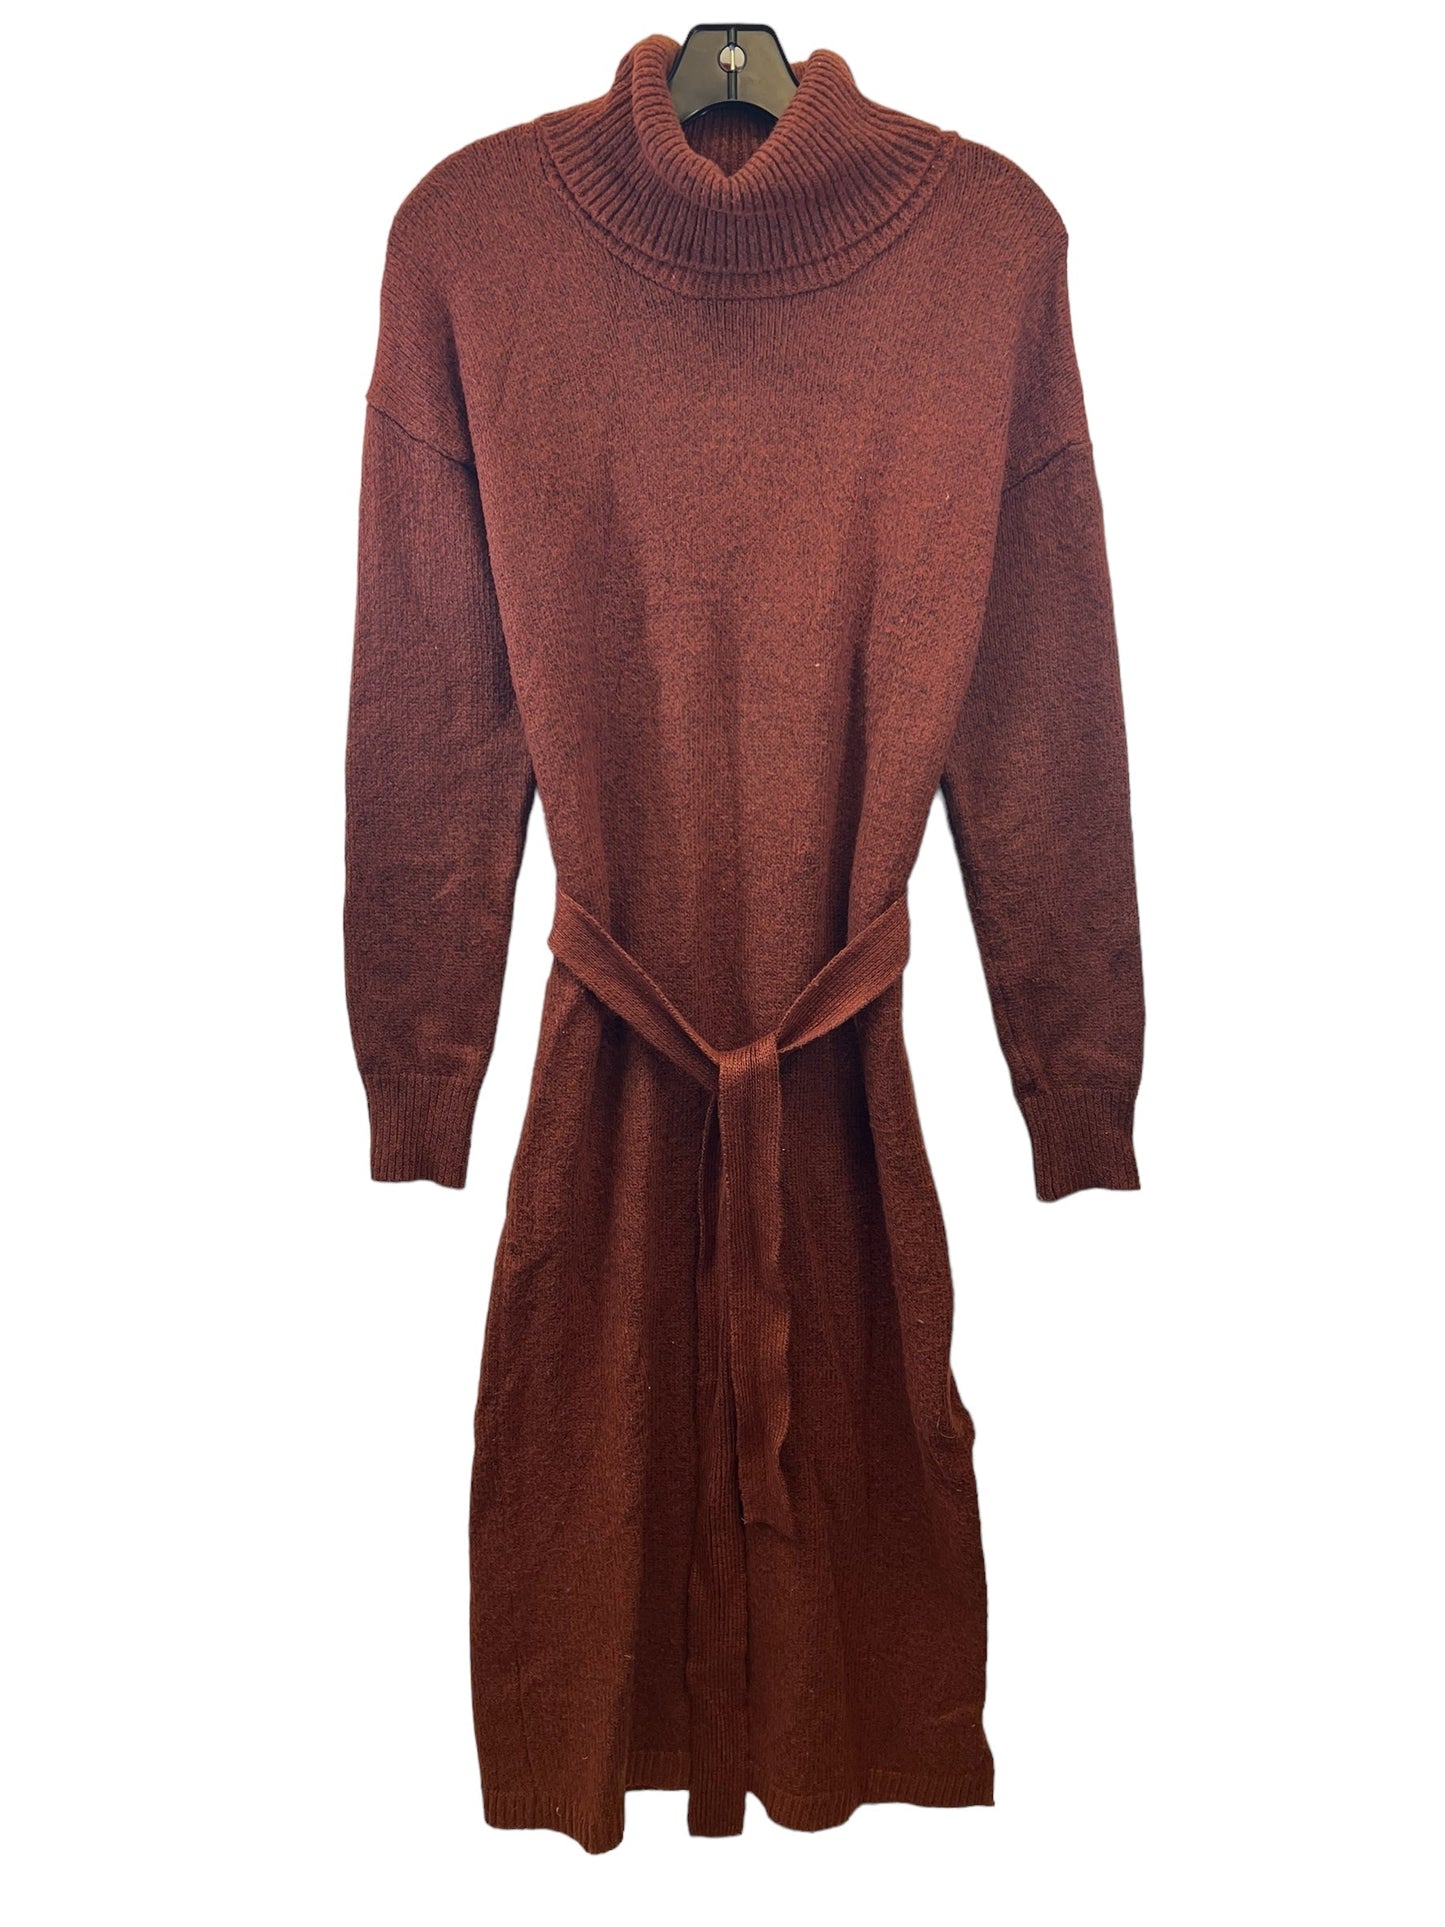 Dress Casual Midi By Rachel Zoe  Size: S